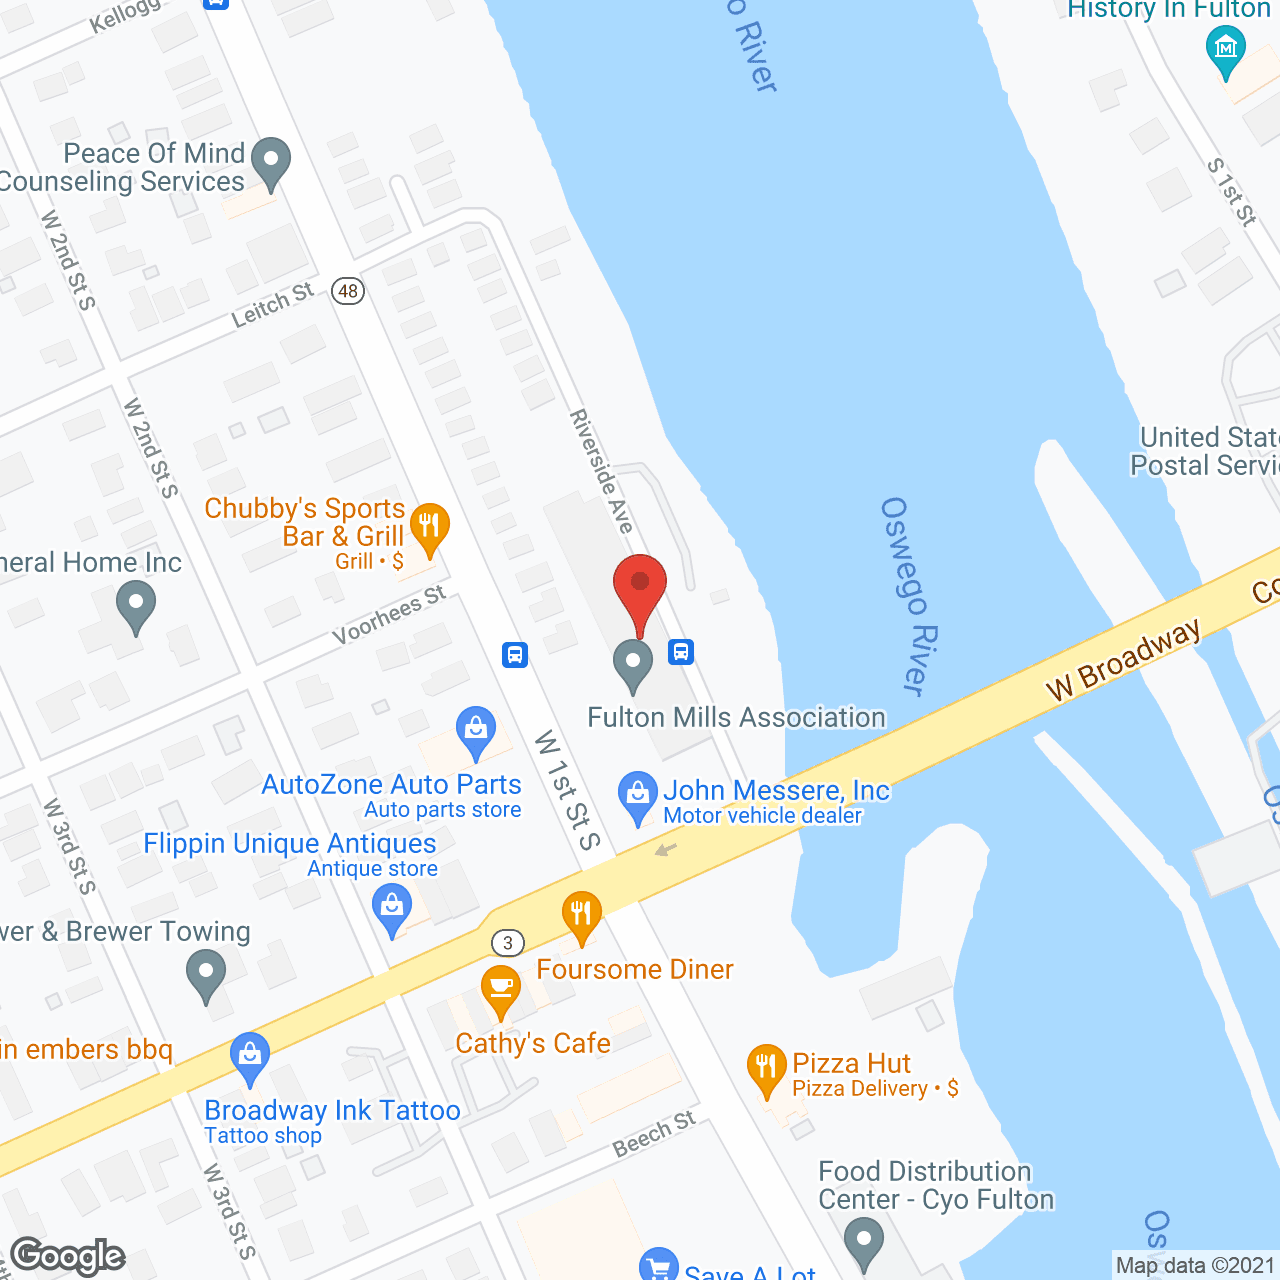 Fulton Mills Assn in google map